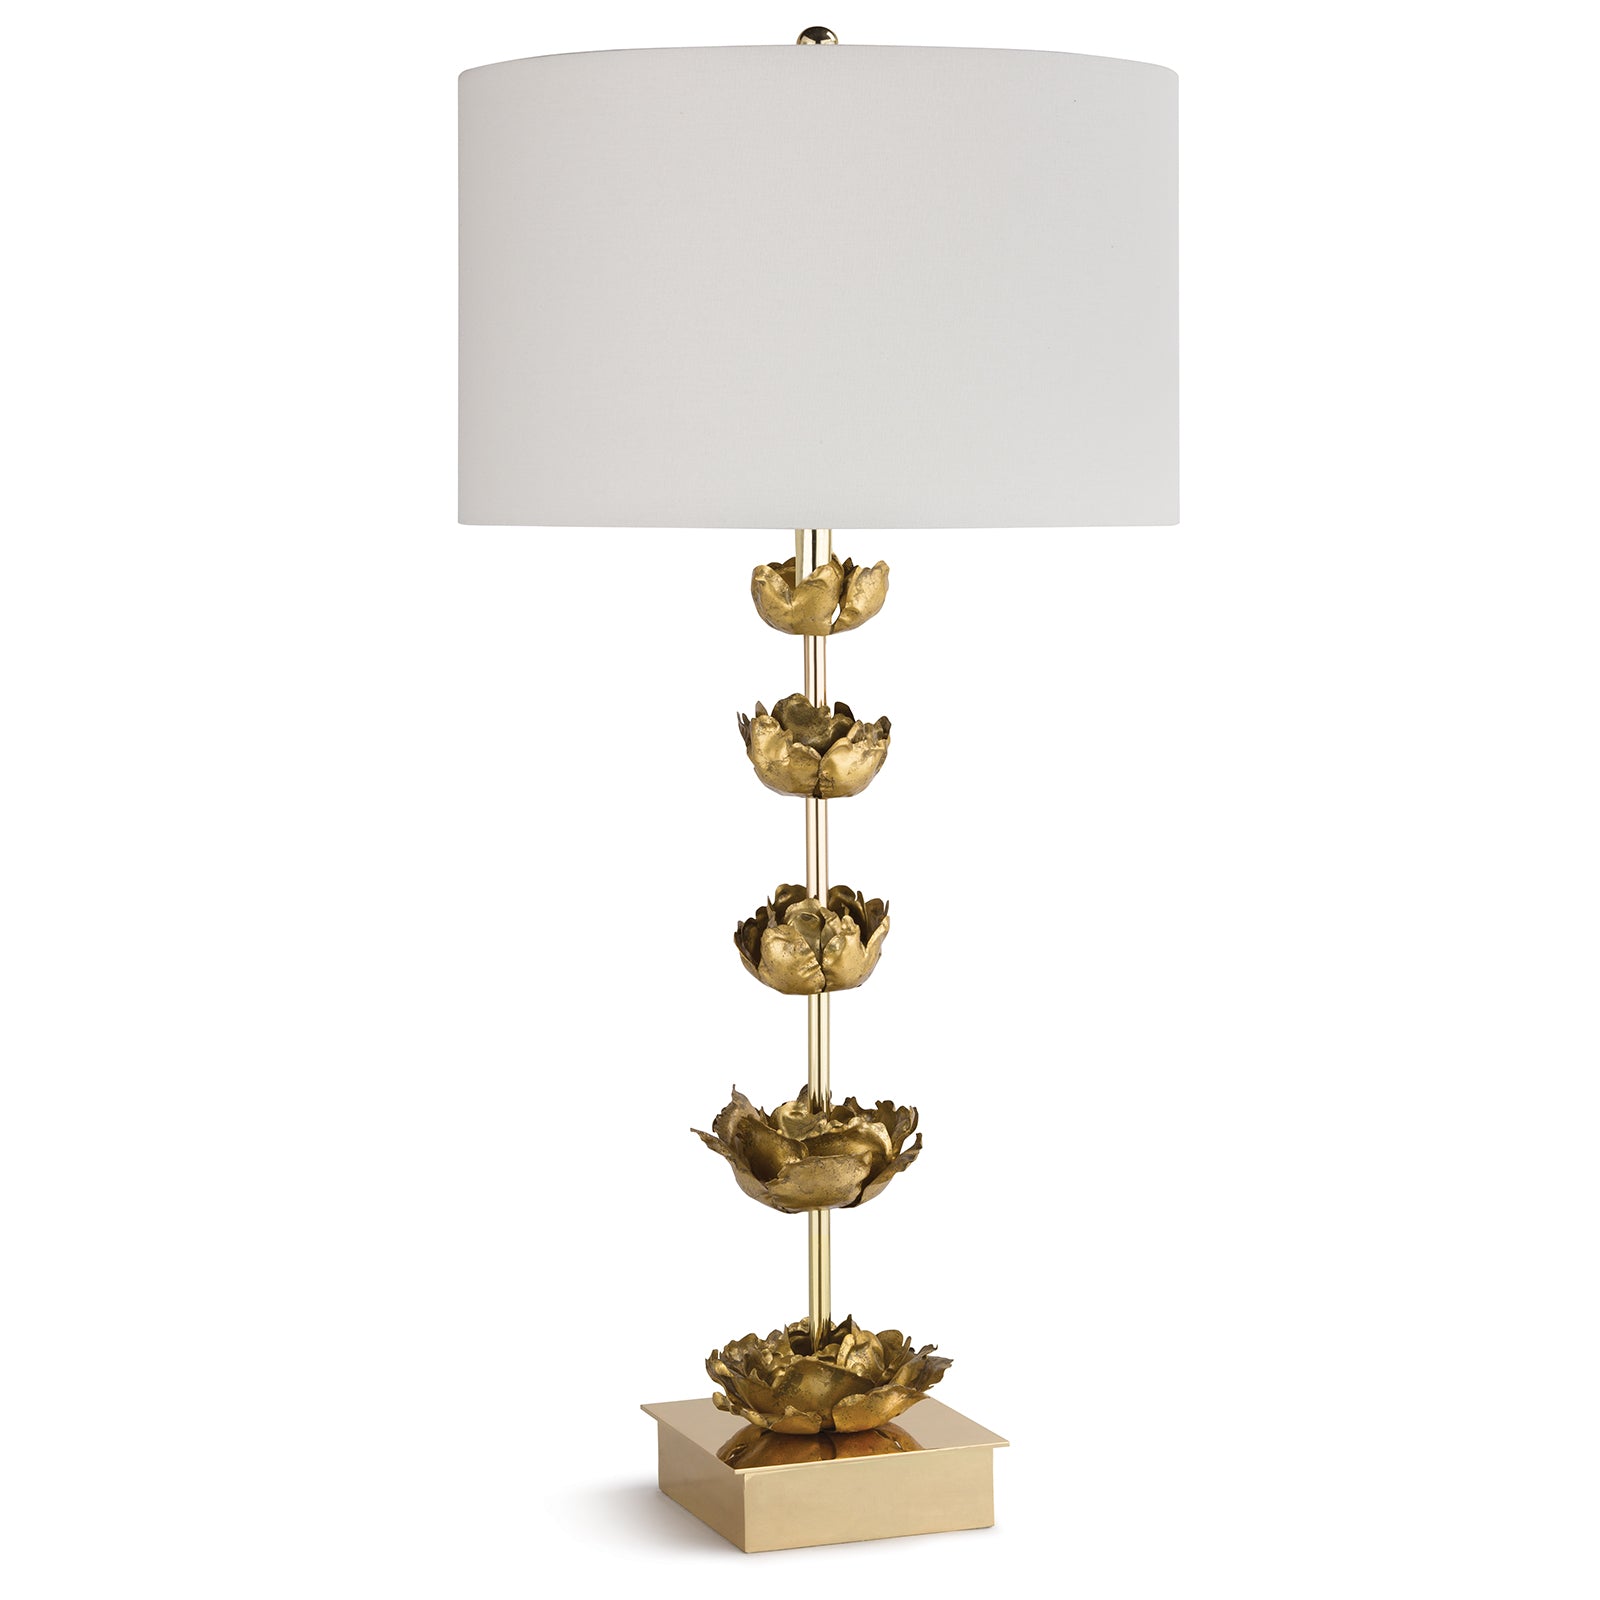 Adeline Table Lamp by Regina Andrew